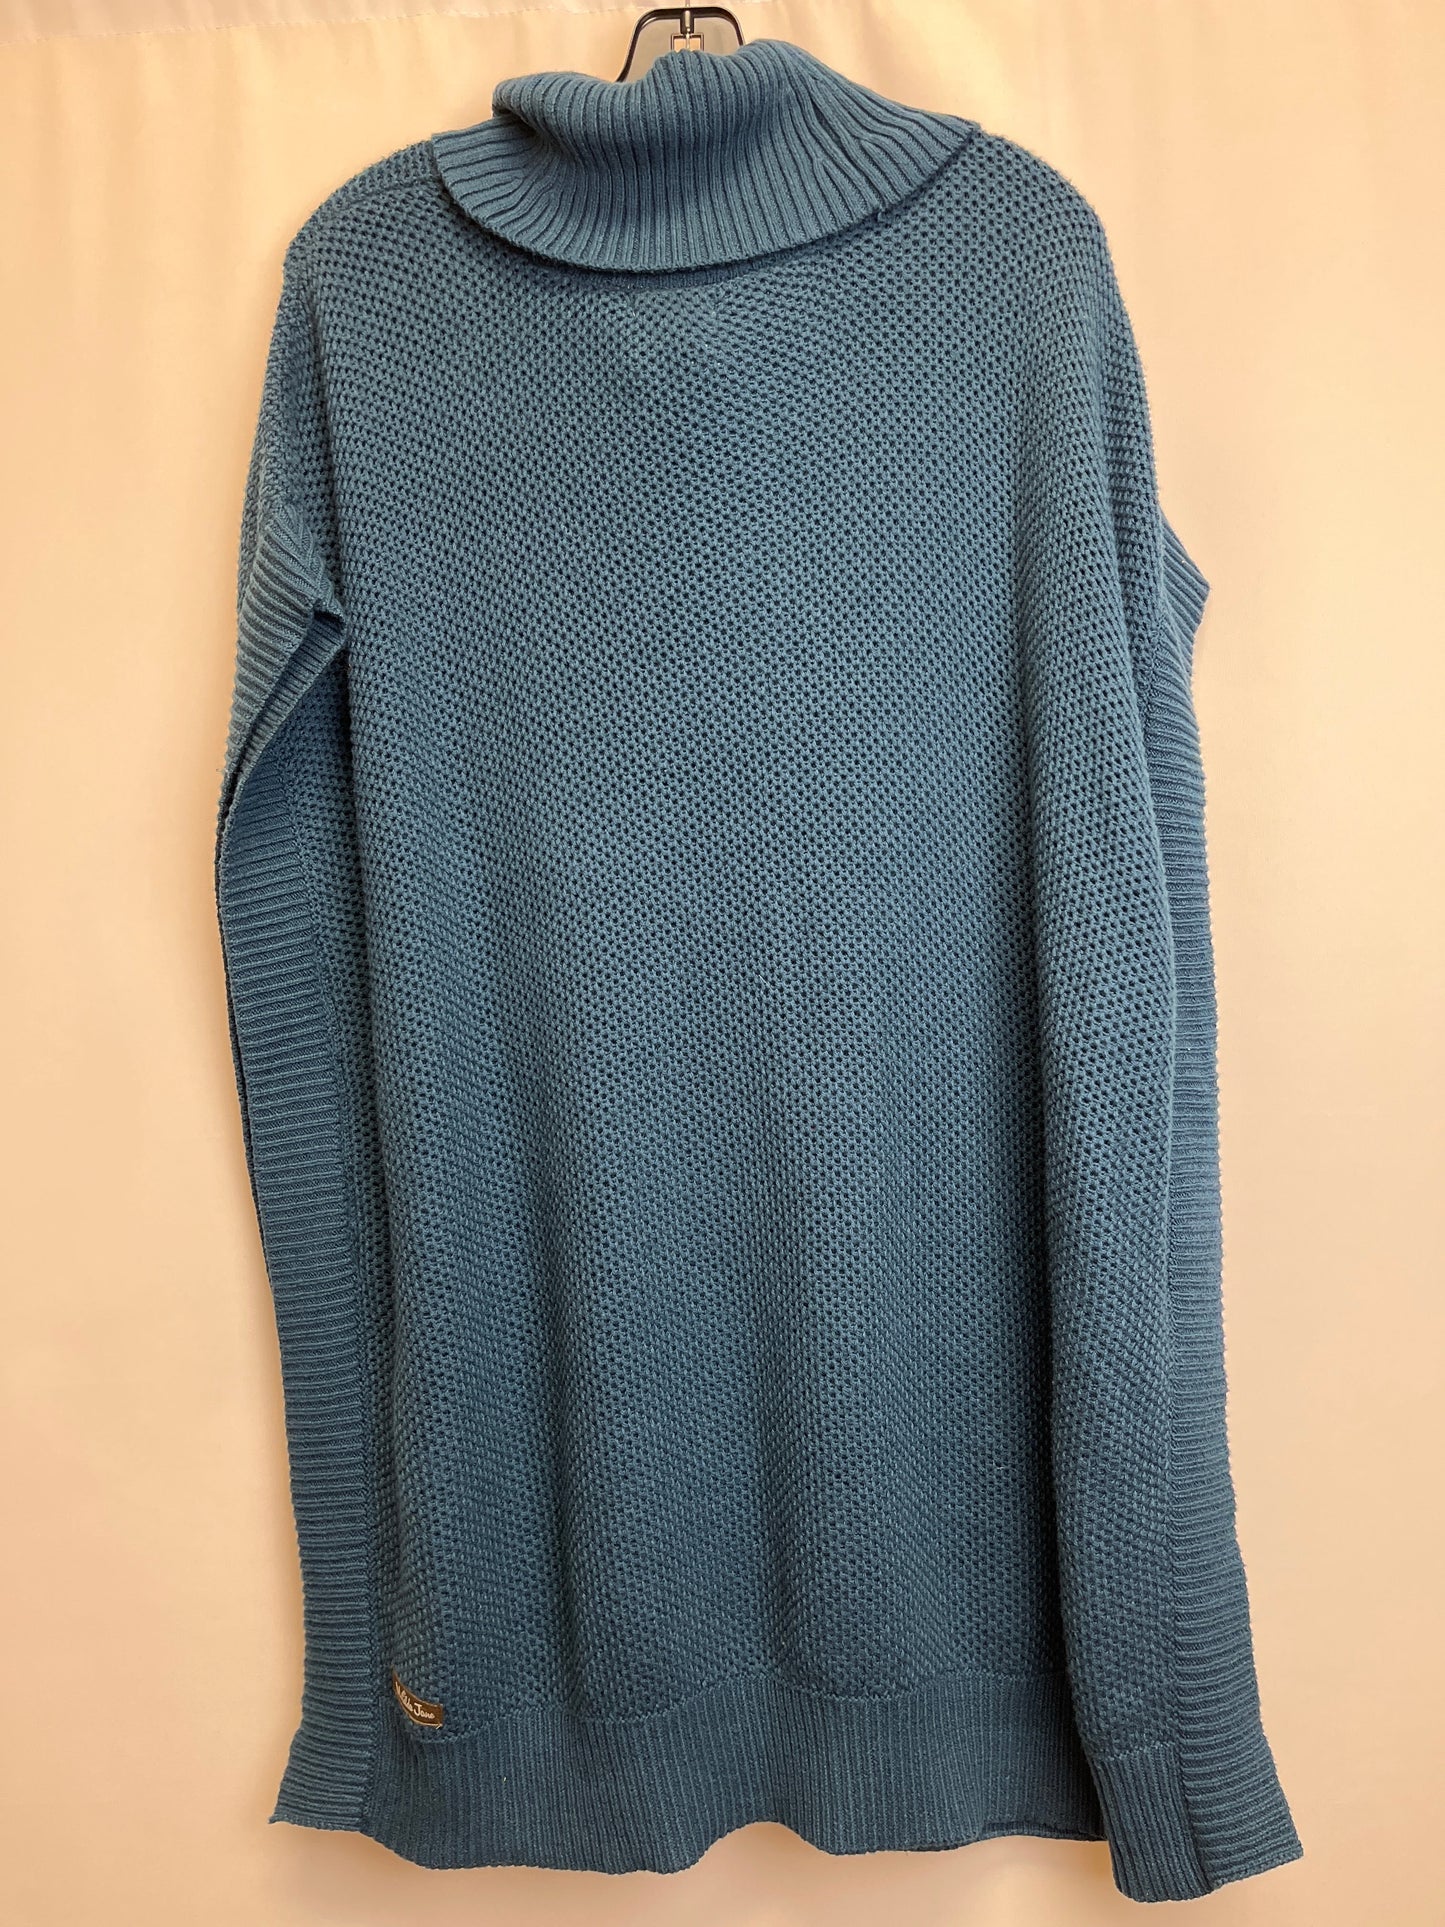 Sweater Short Sleeve By Matilda Jane  Size: L